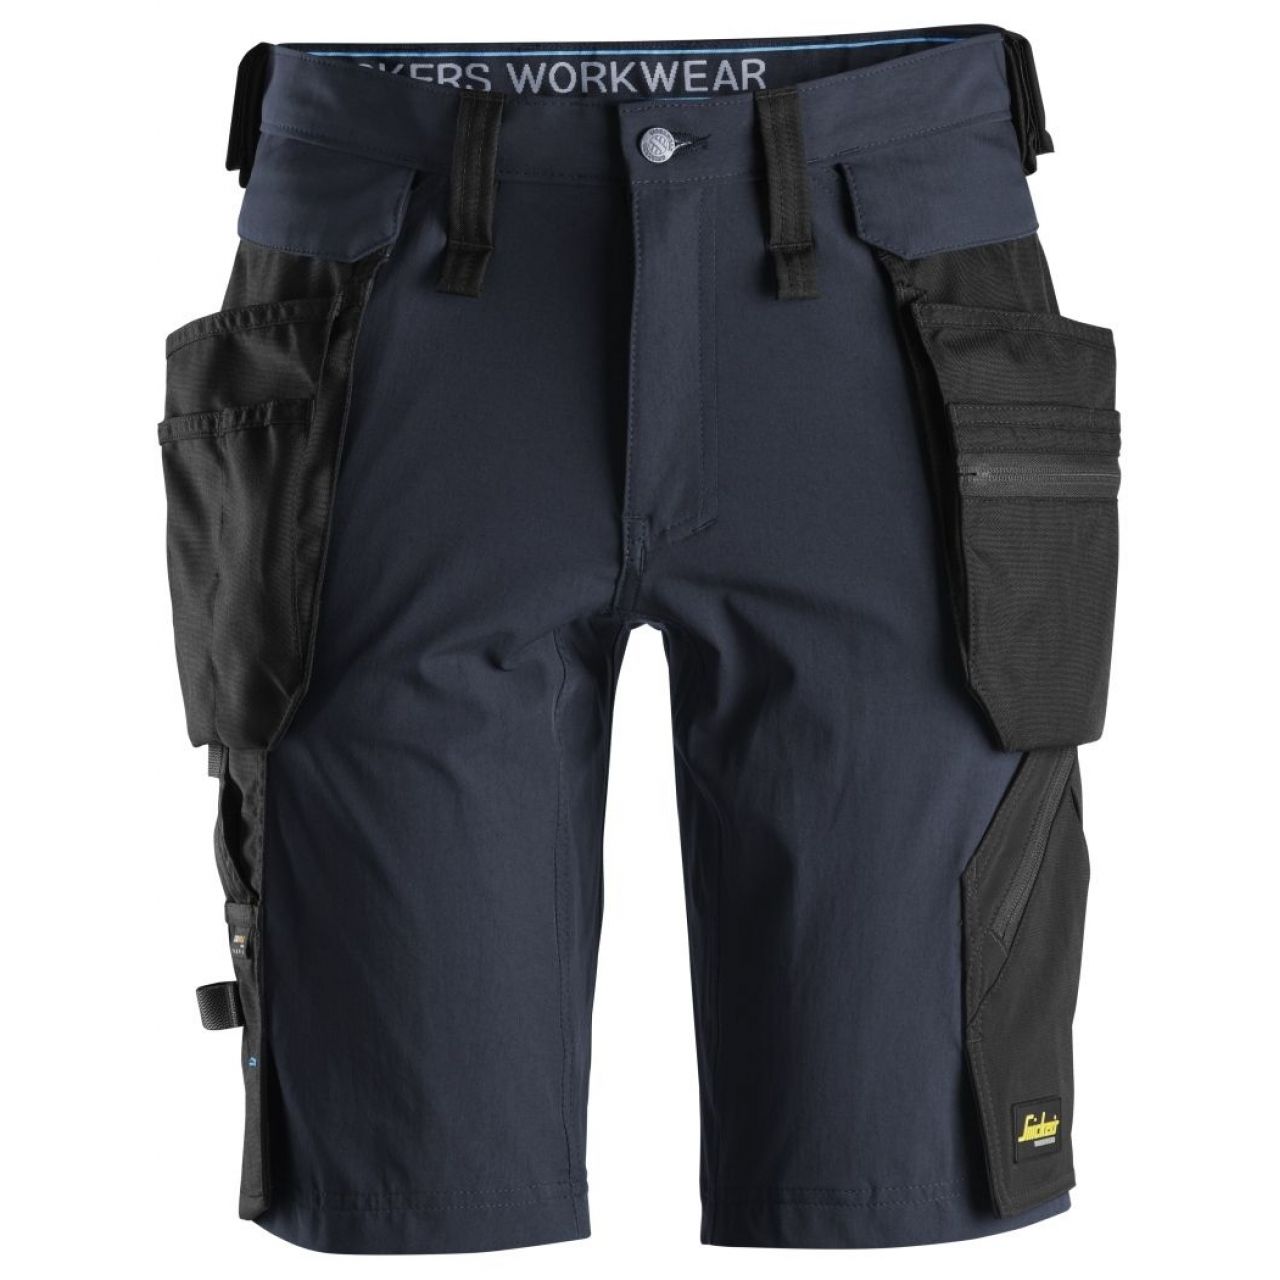 Pantalon corto + bolsillos flotantes desmontables LiteWork azul marino-negro talla 060